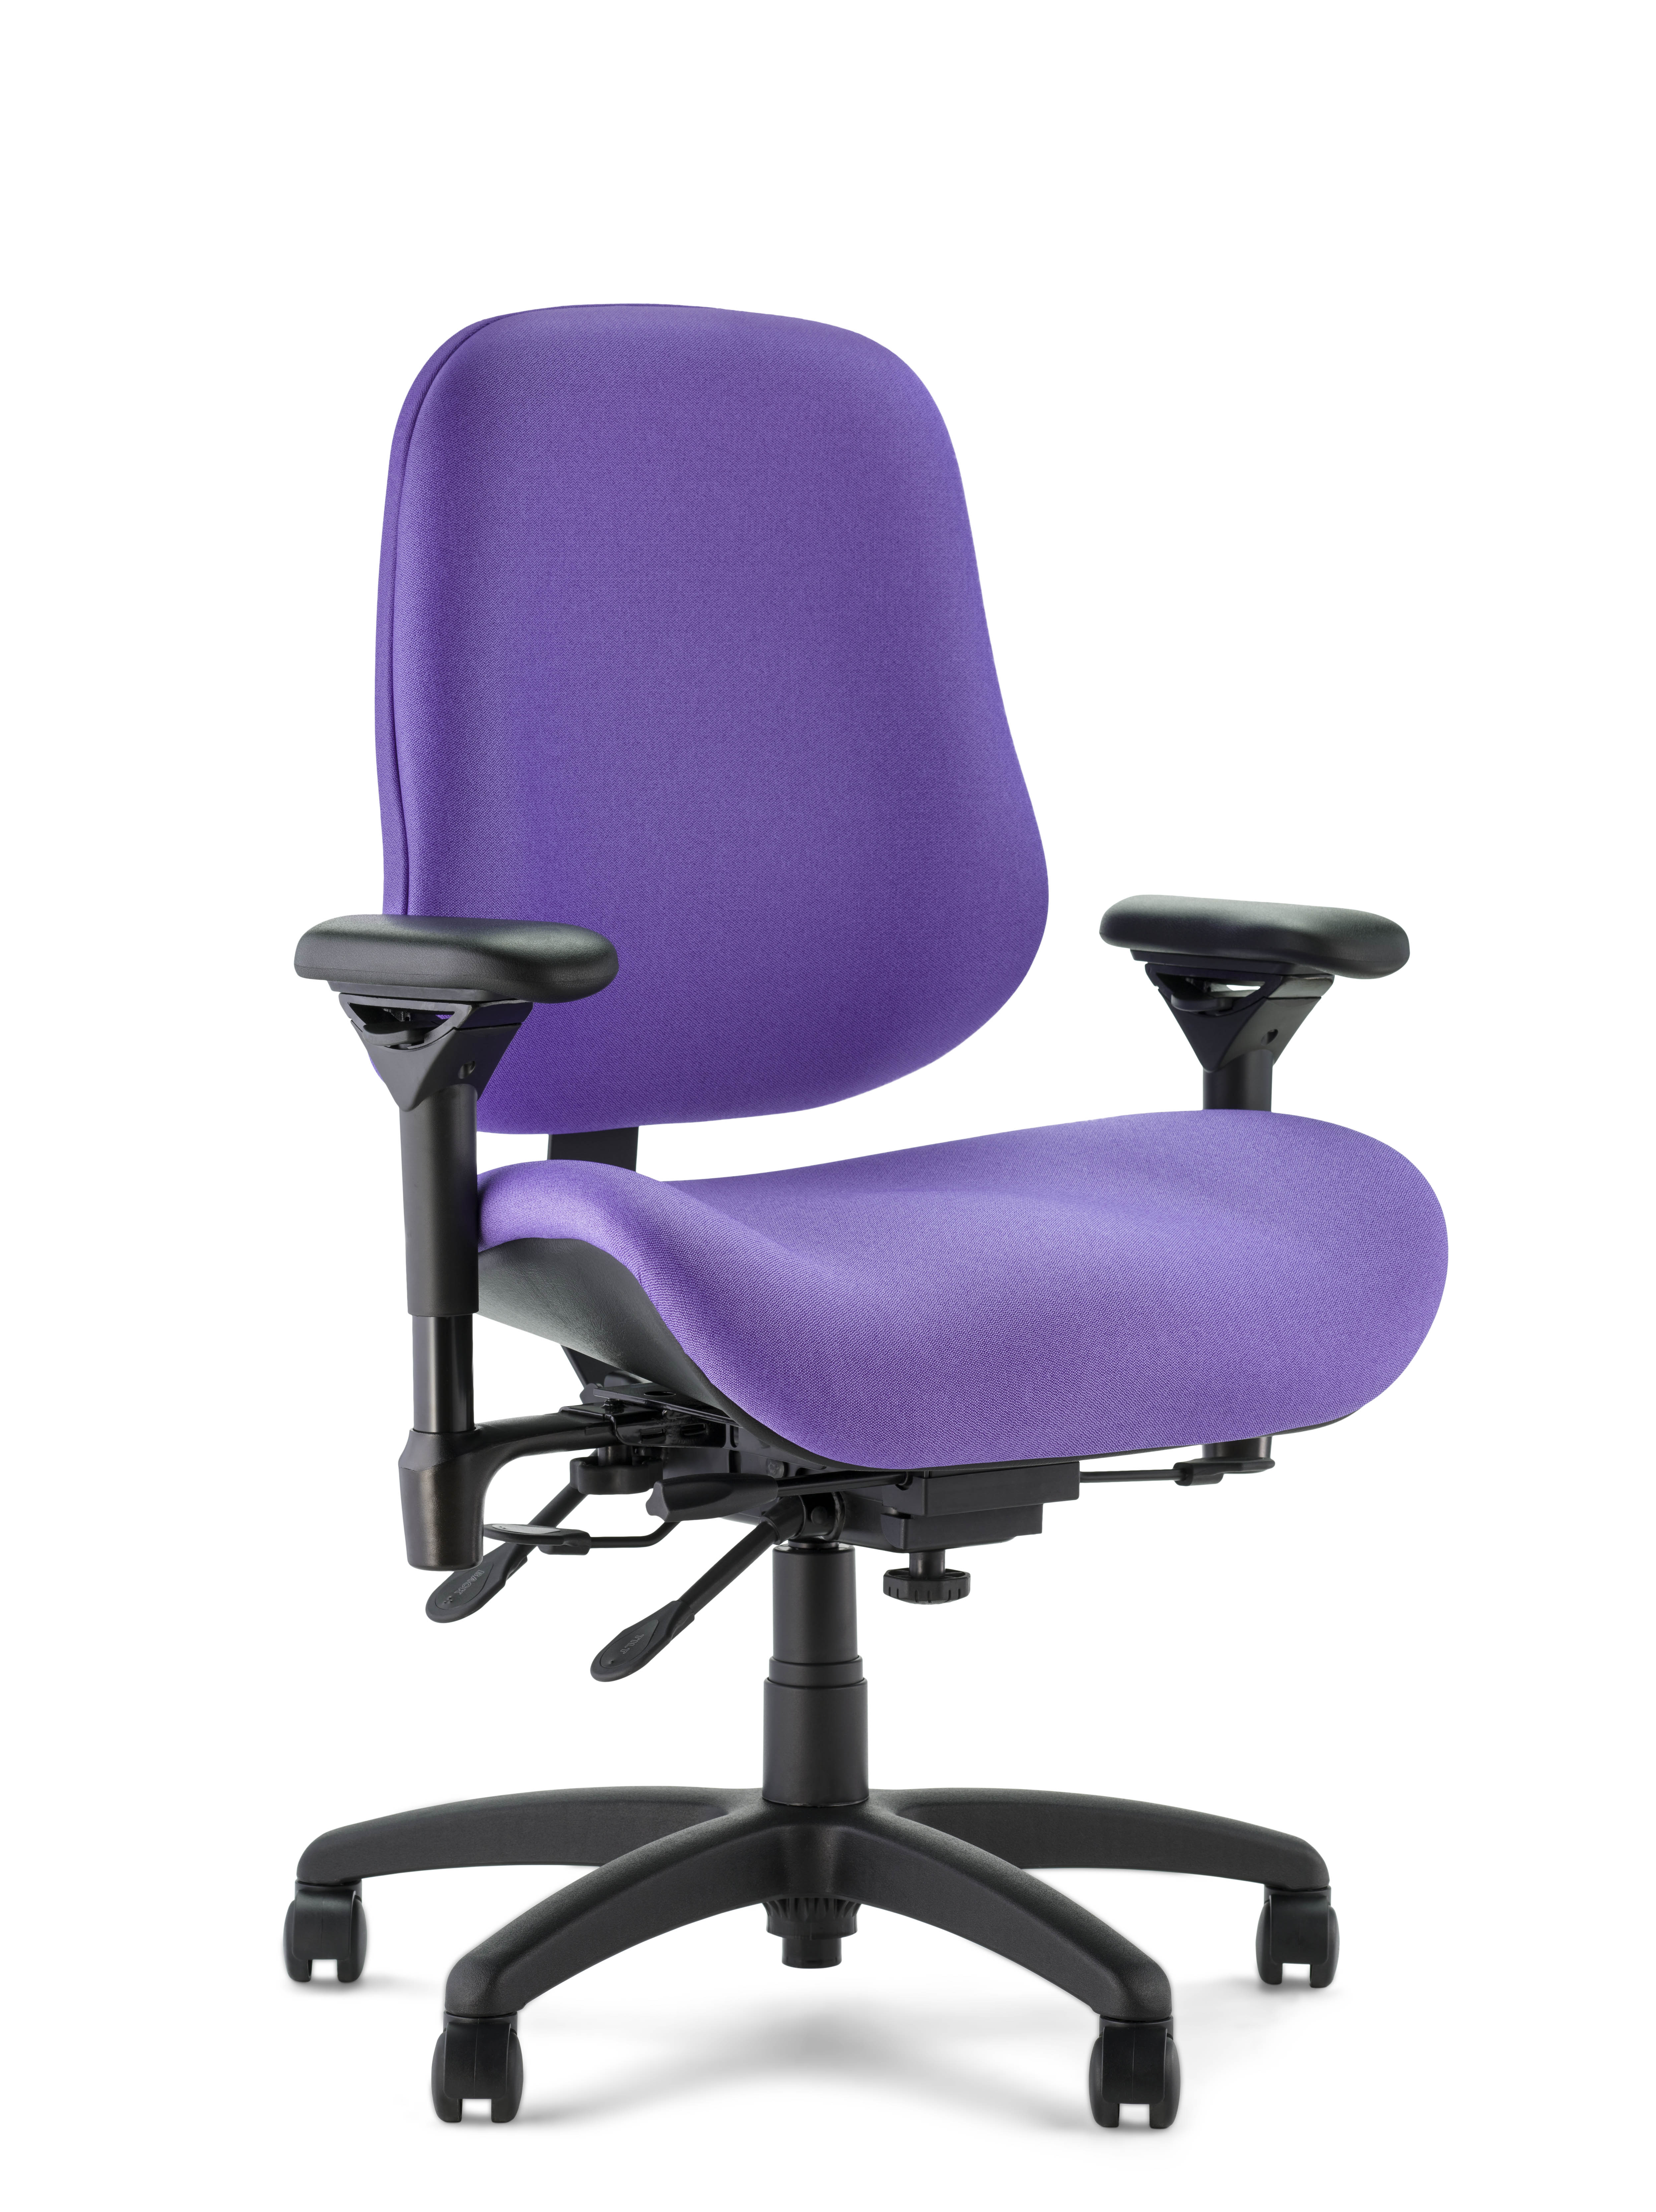 J2504 task chair black base Infinity Hyacinth right angle